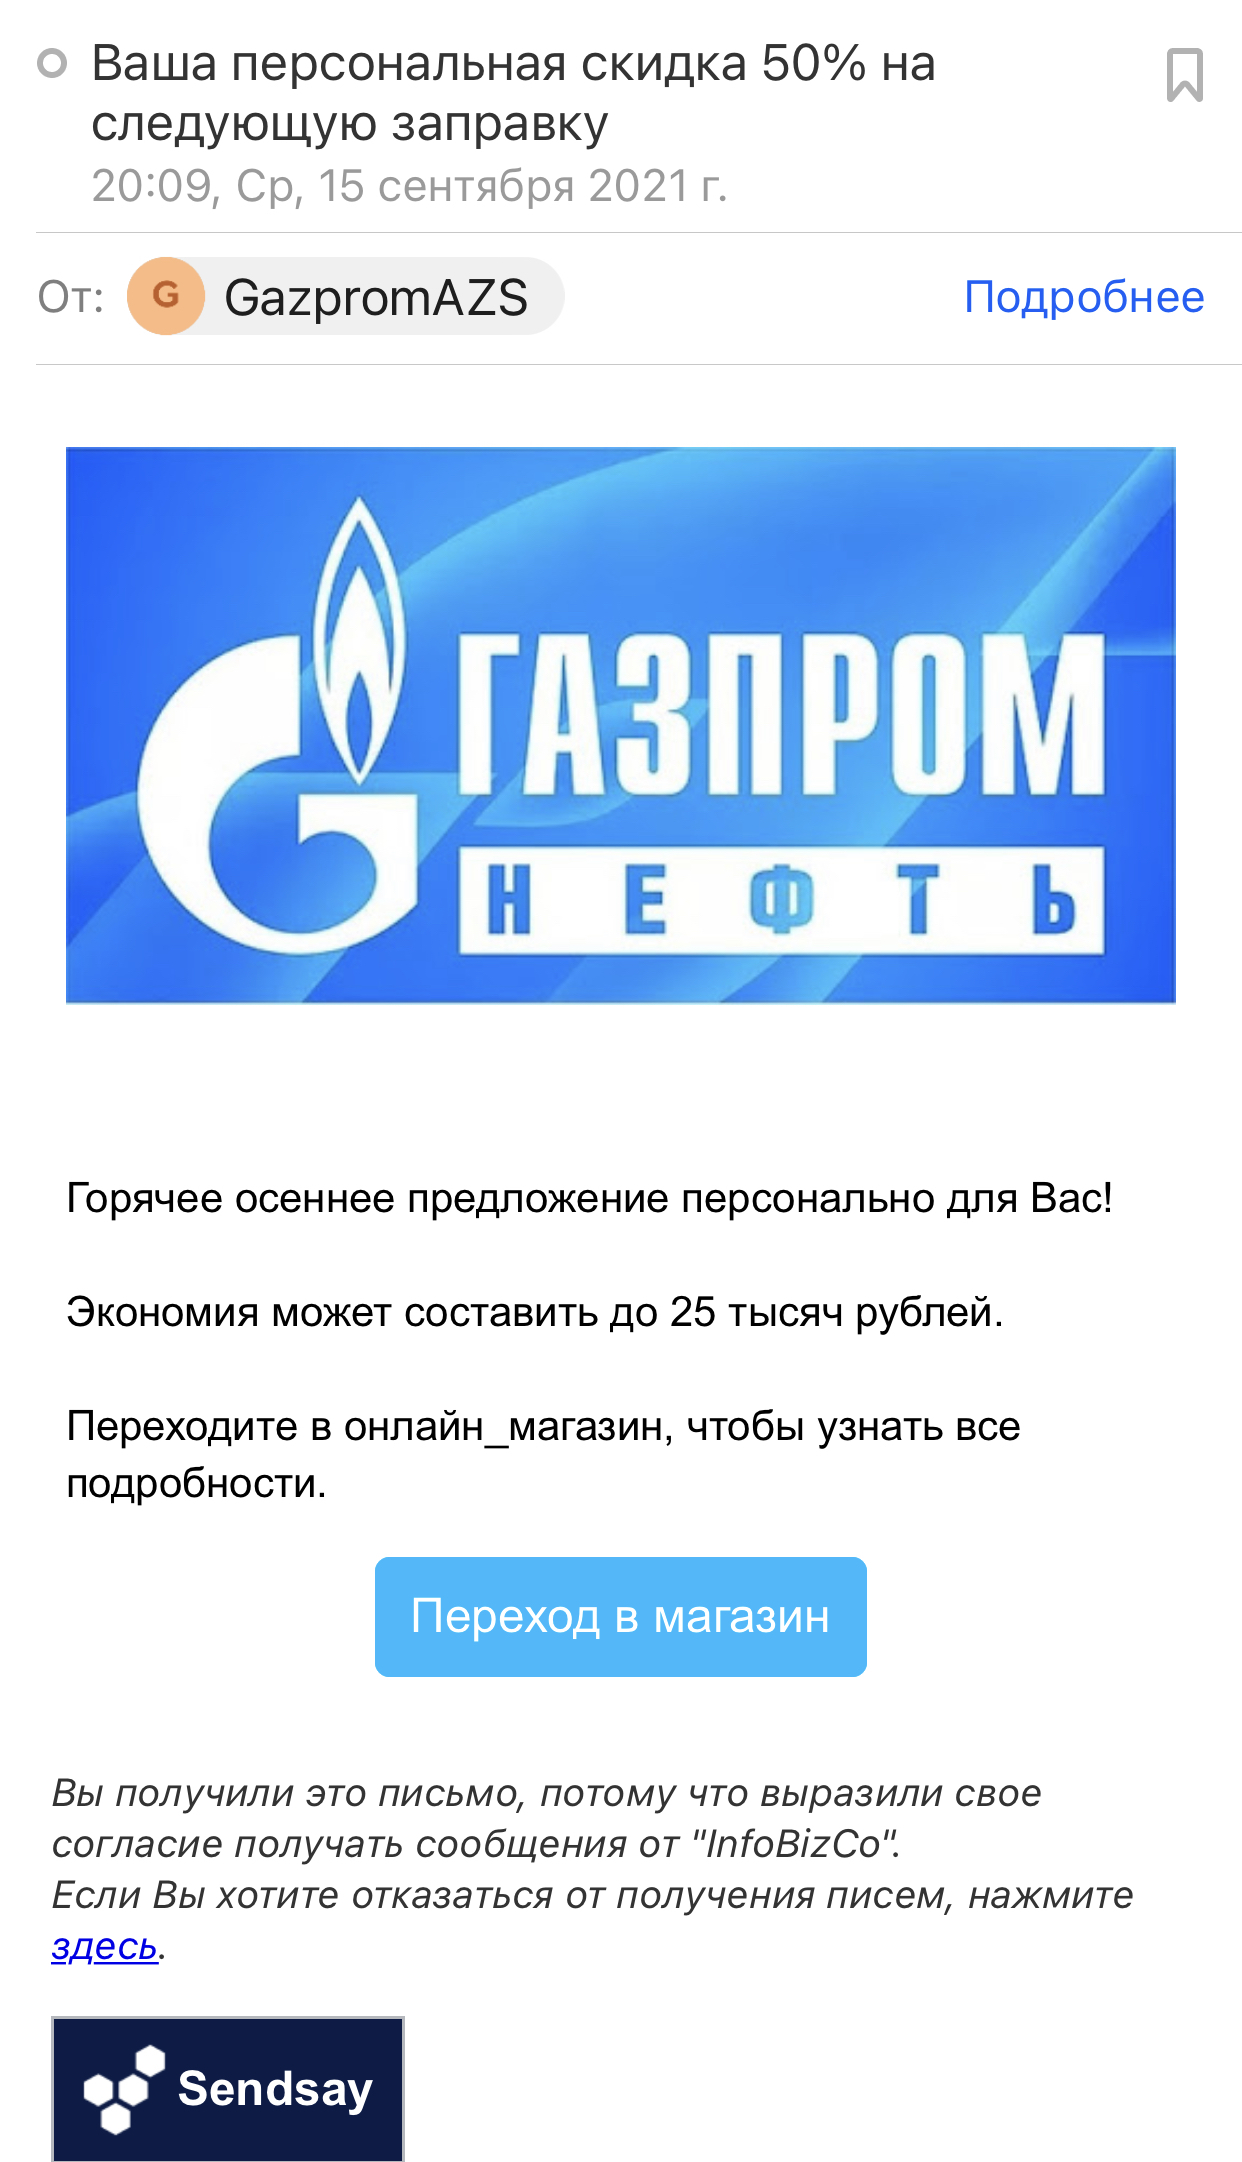 Carefully! Scam! - My, Negative, Fraud, Scam, Gazprom